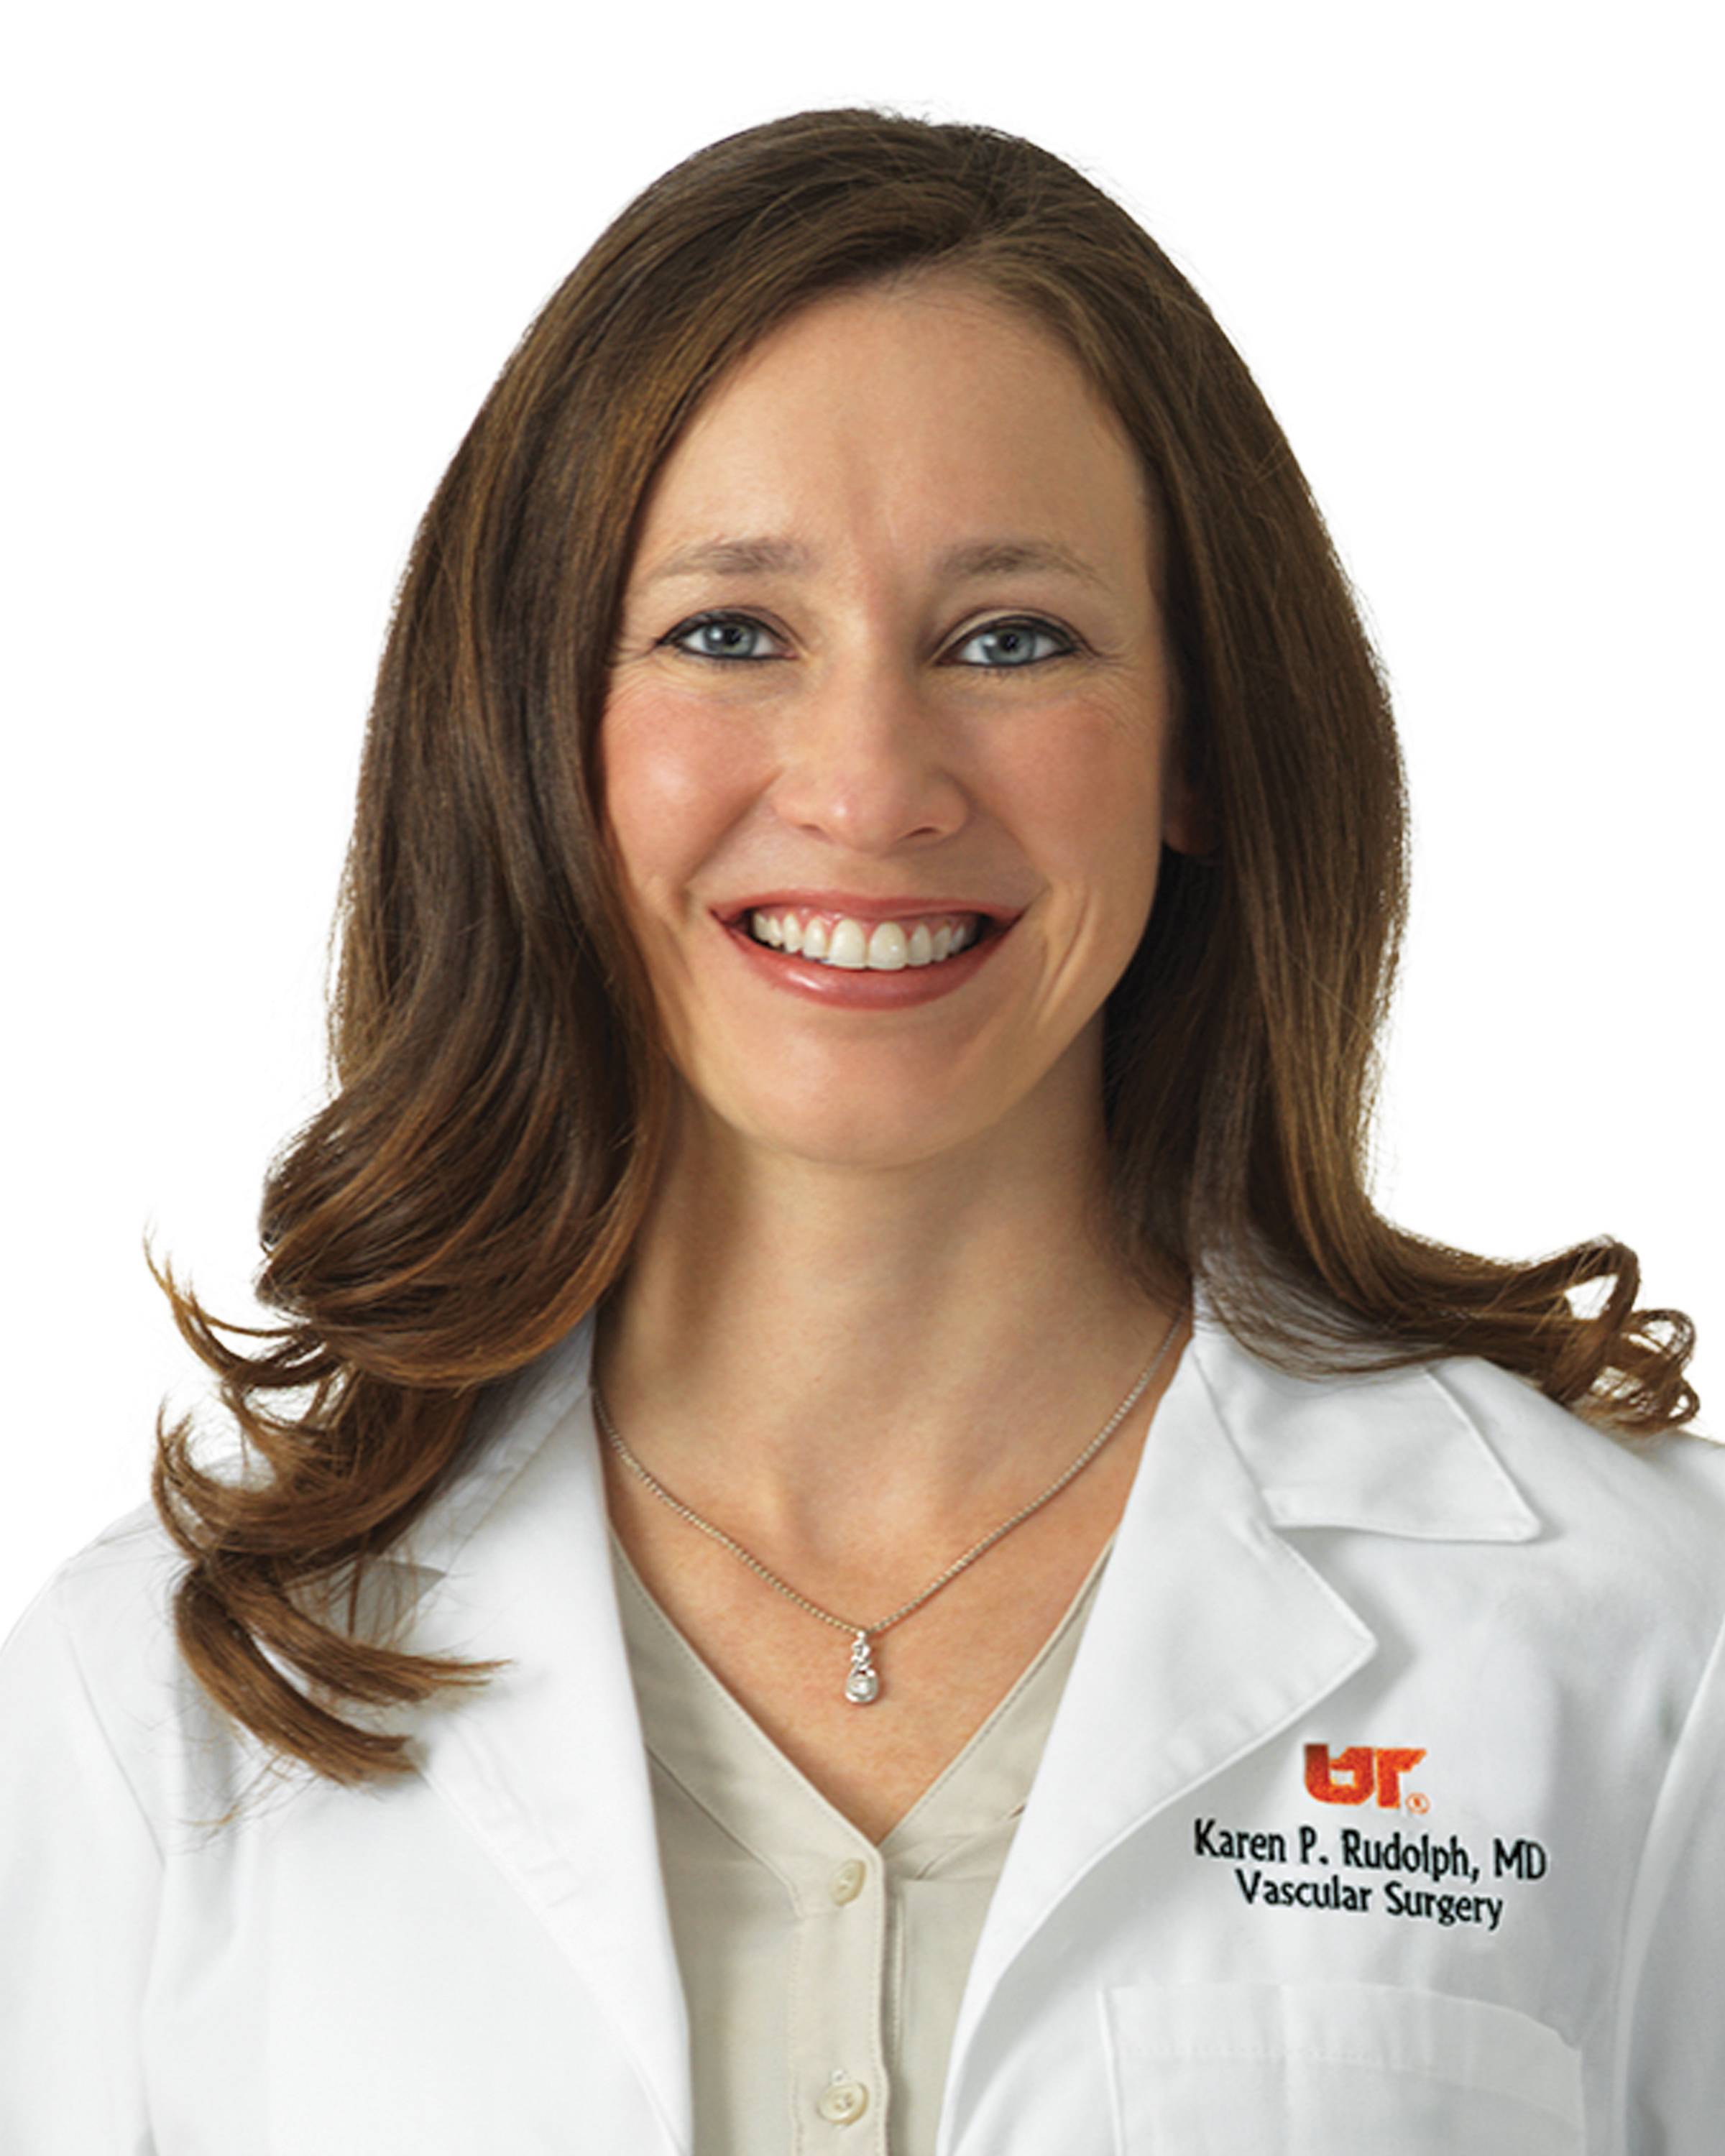 Karen P. Rudolph, MD, RPVI, Faculty, Surgery Residency and Vascular Surgery Fellowship